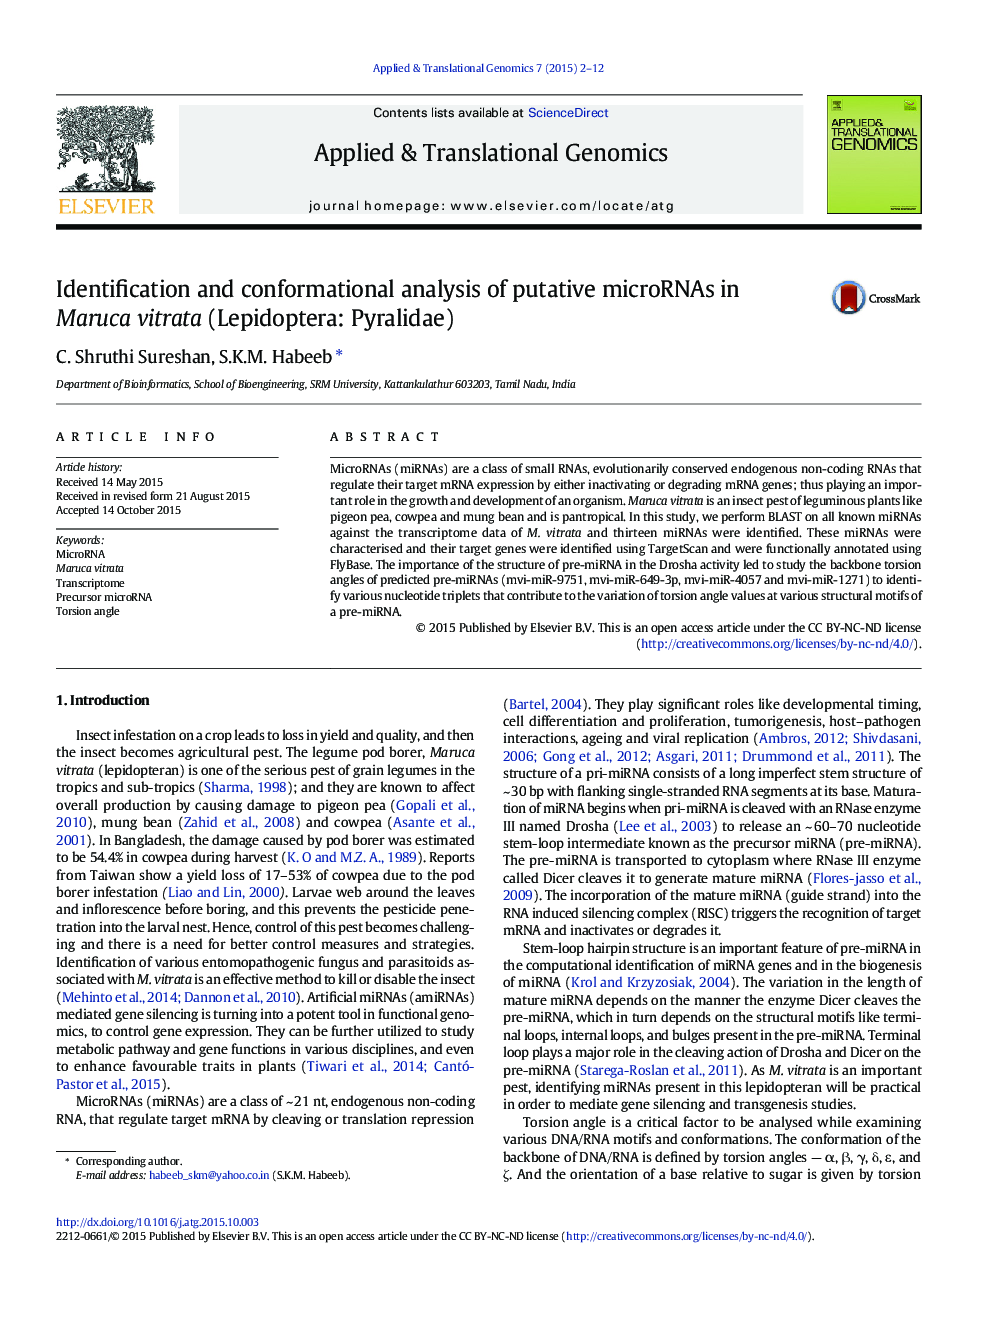 Identification and conformational analysis of putative microRNAs in Maruca vitrata (Lepidoptera: Pyralidae)